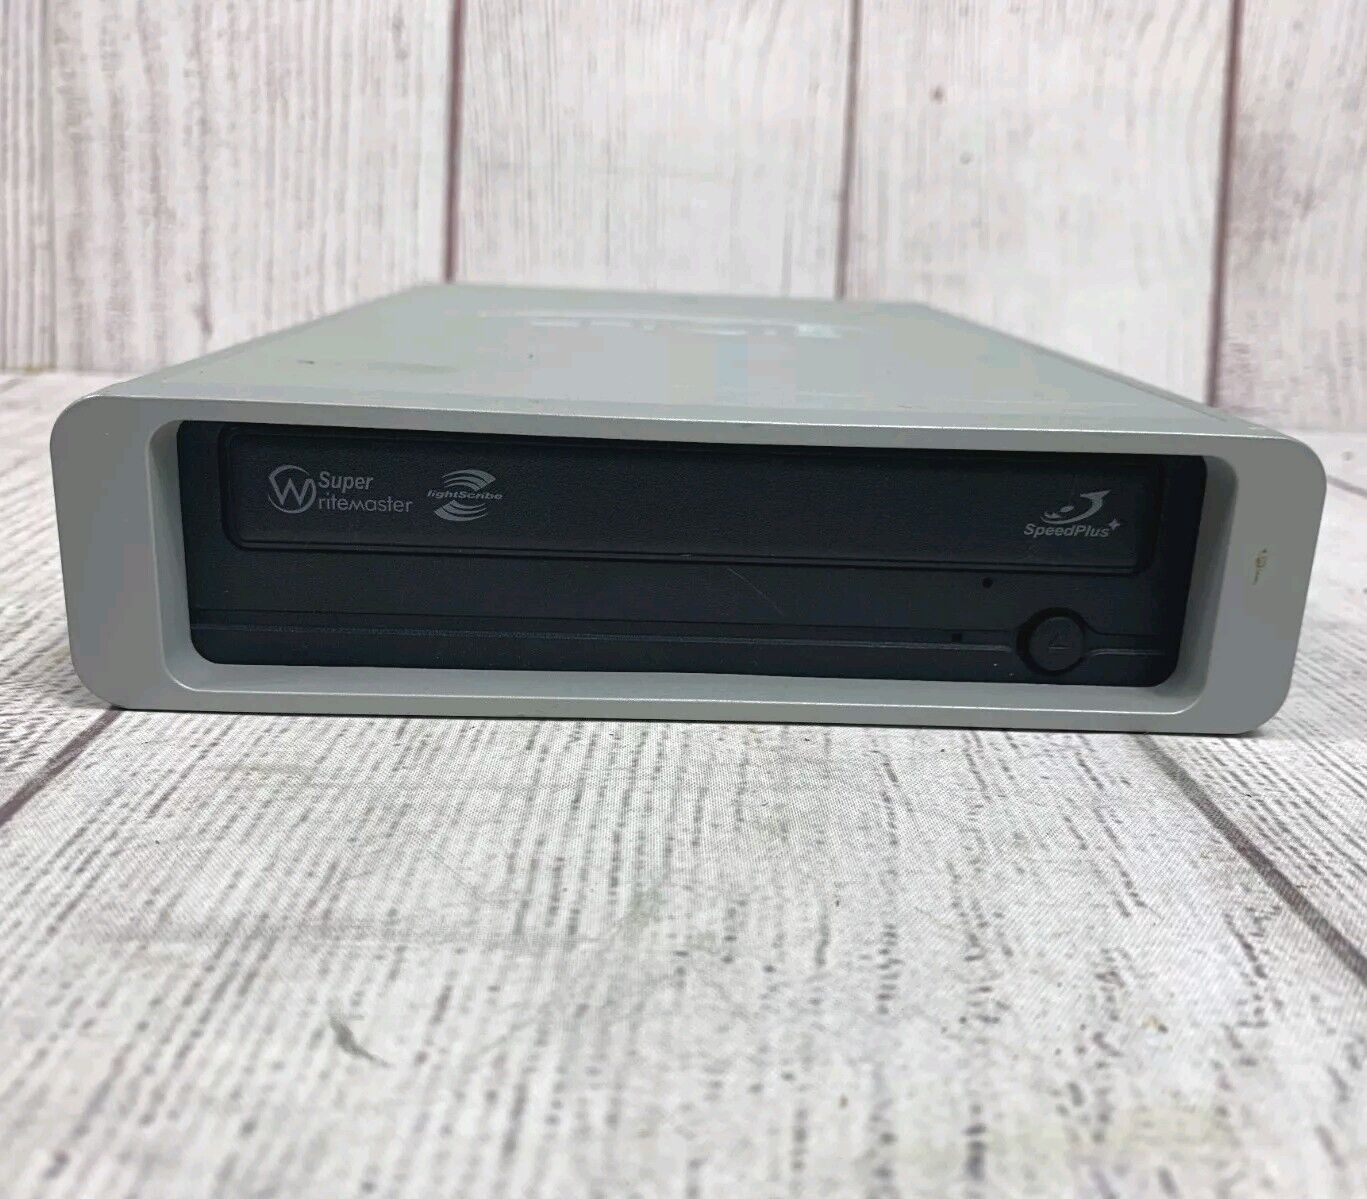 Lacie D2 525 U2 Super Writemaster DVD Multi Recorder - SpeedPlus+ TESTED WORKING